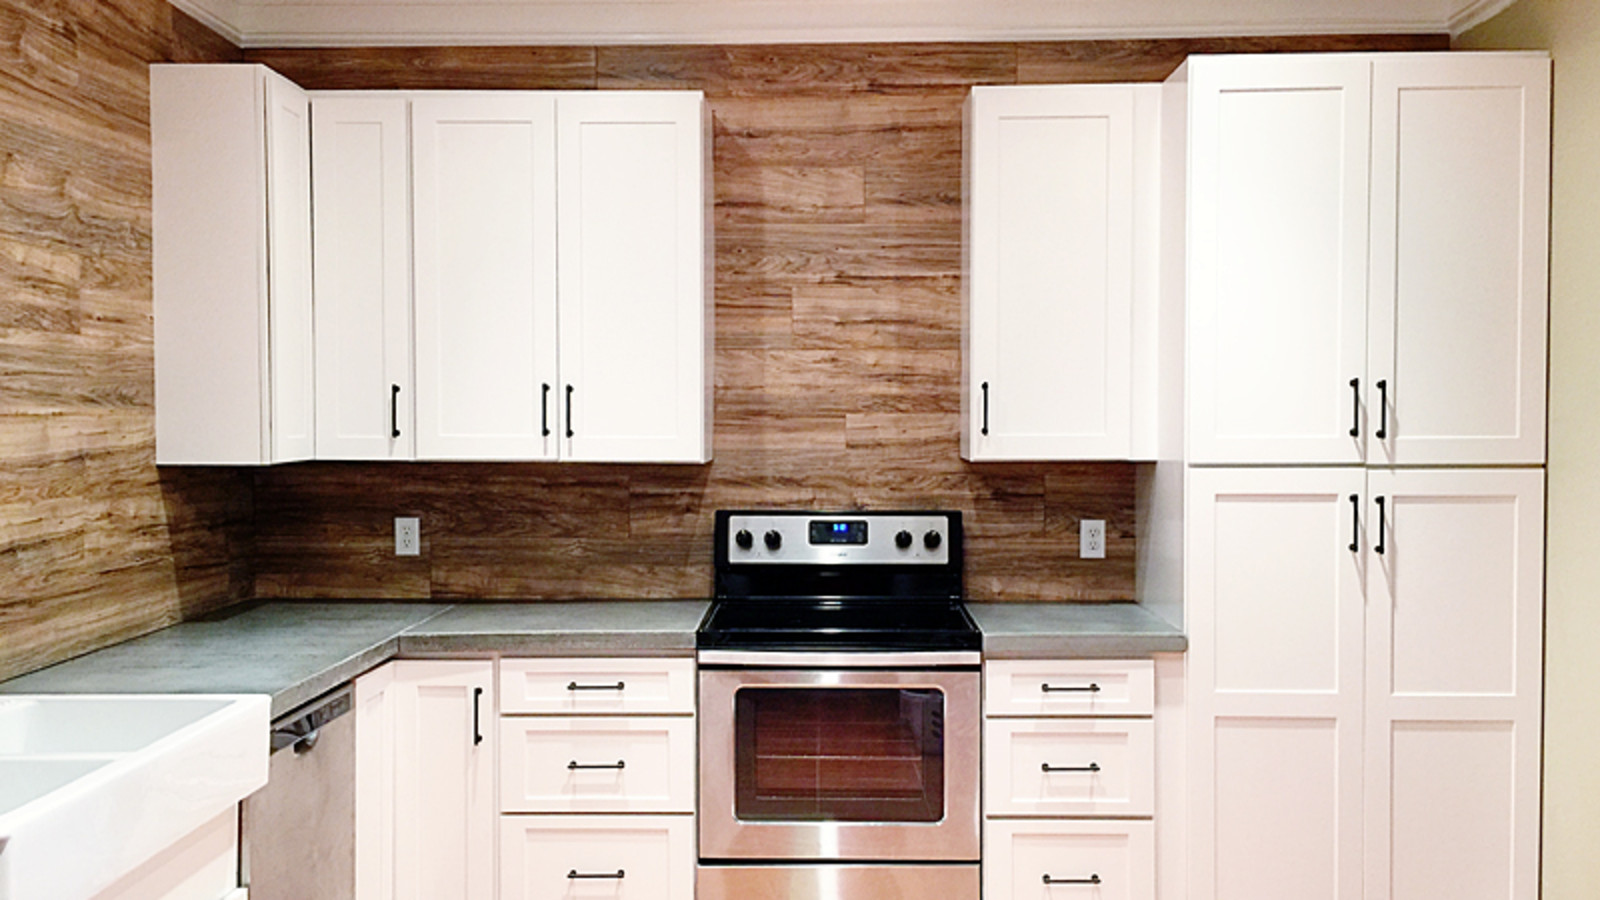 Laminate Kitchen Backsplash
 Use Laminate Flooring as a Durable Easy to Clean